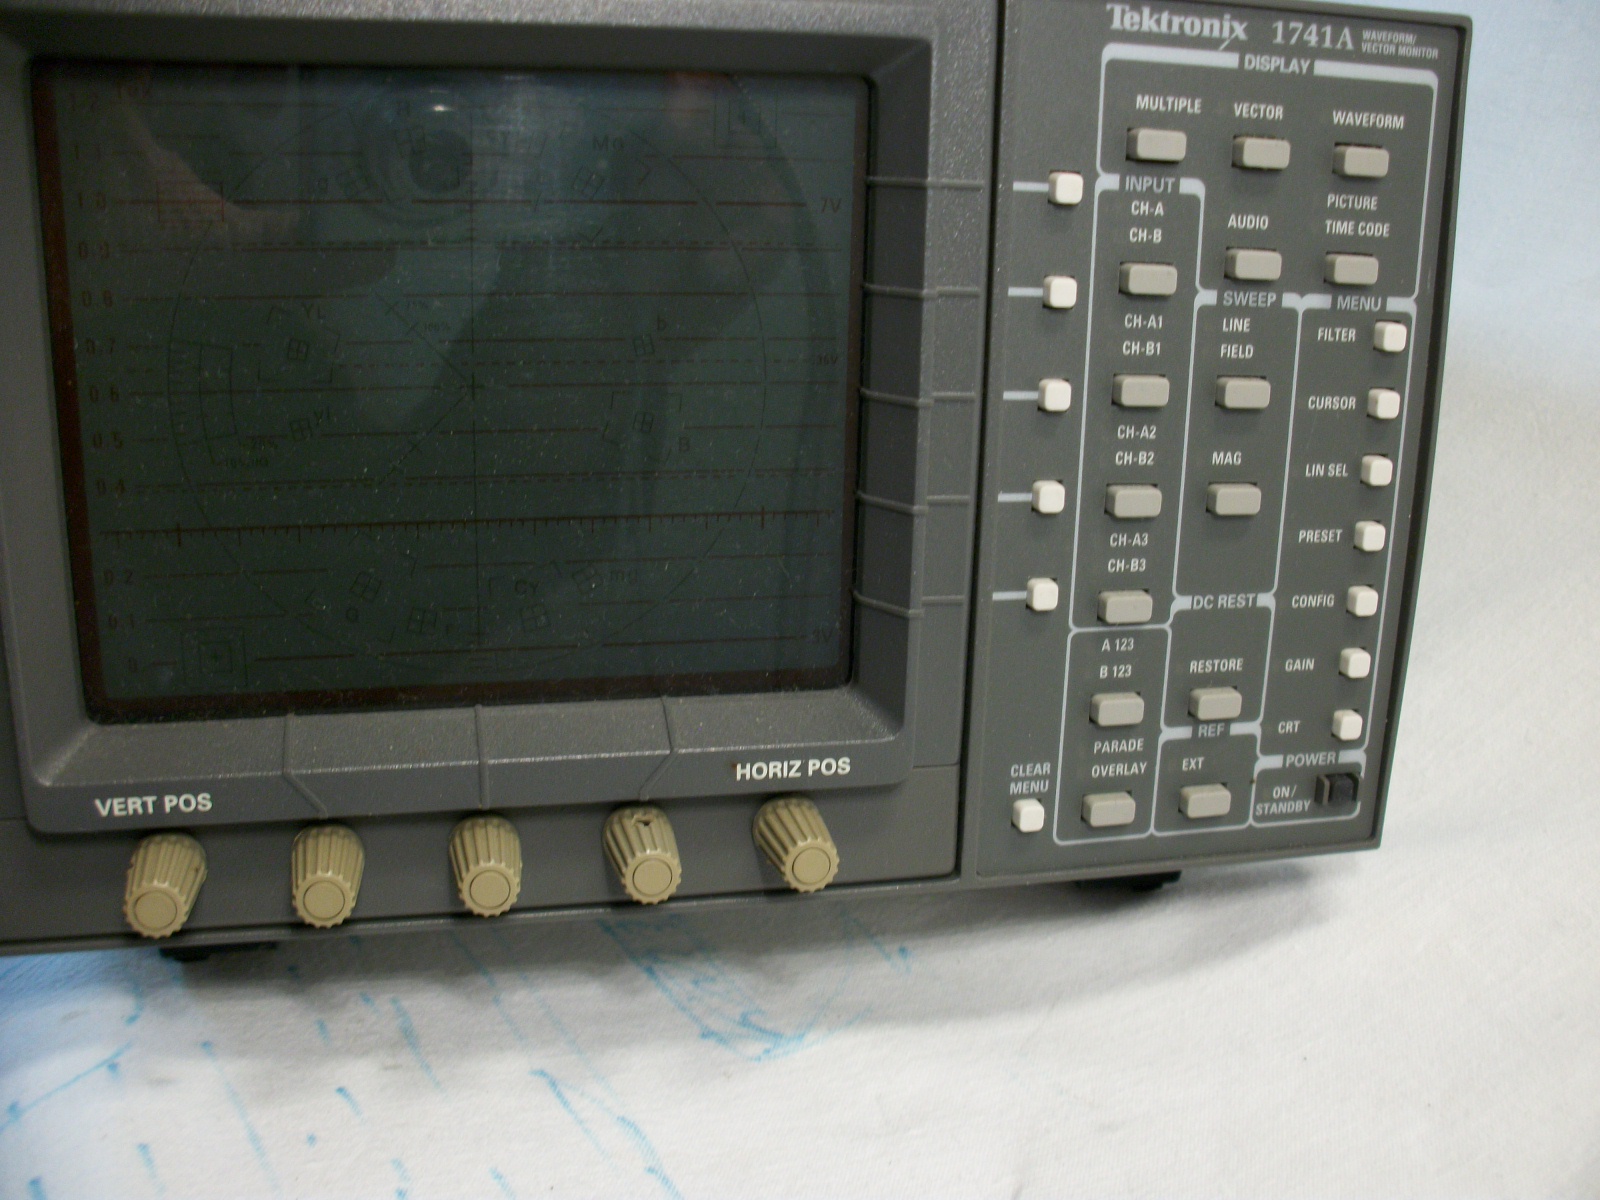 Tektronix 1741A Pal Waveform Vector Monitor 